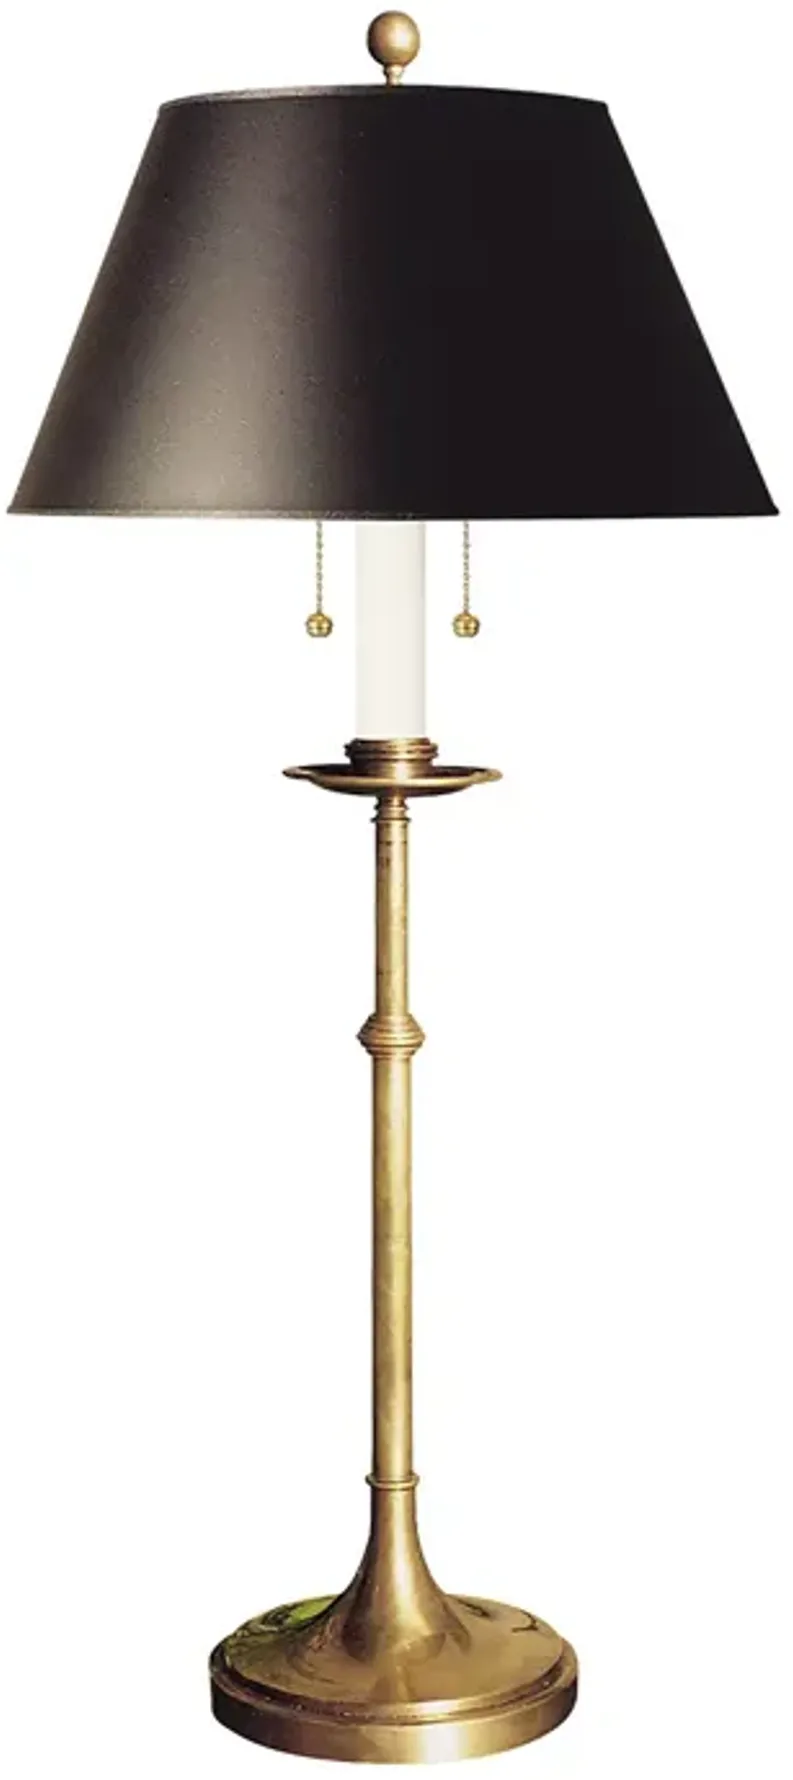 Chapman & Myers Dorchester Club Table Lamp